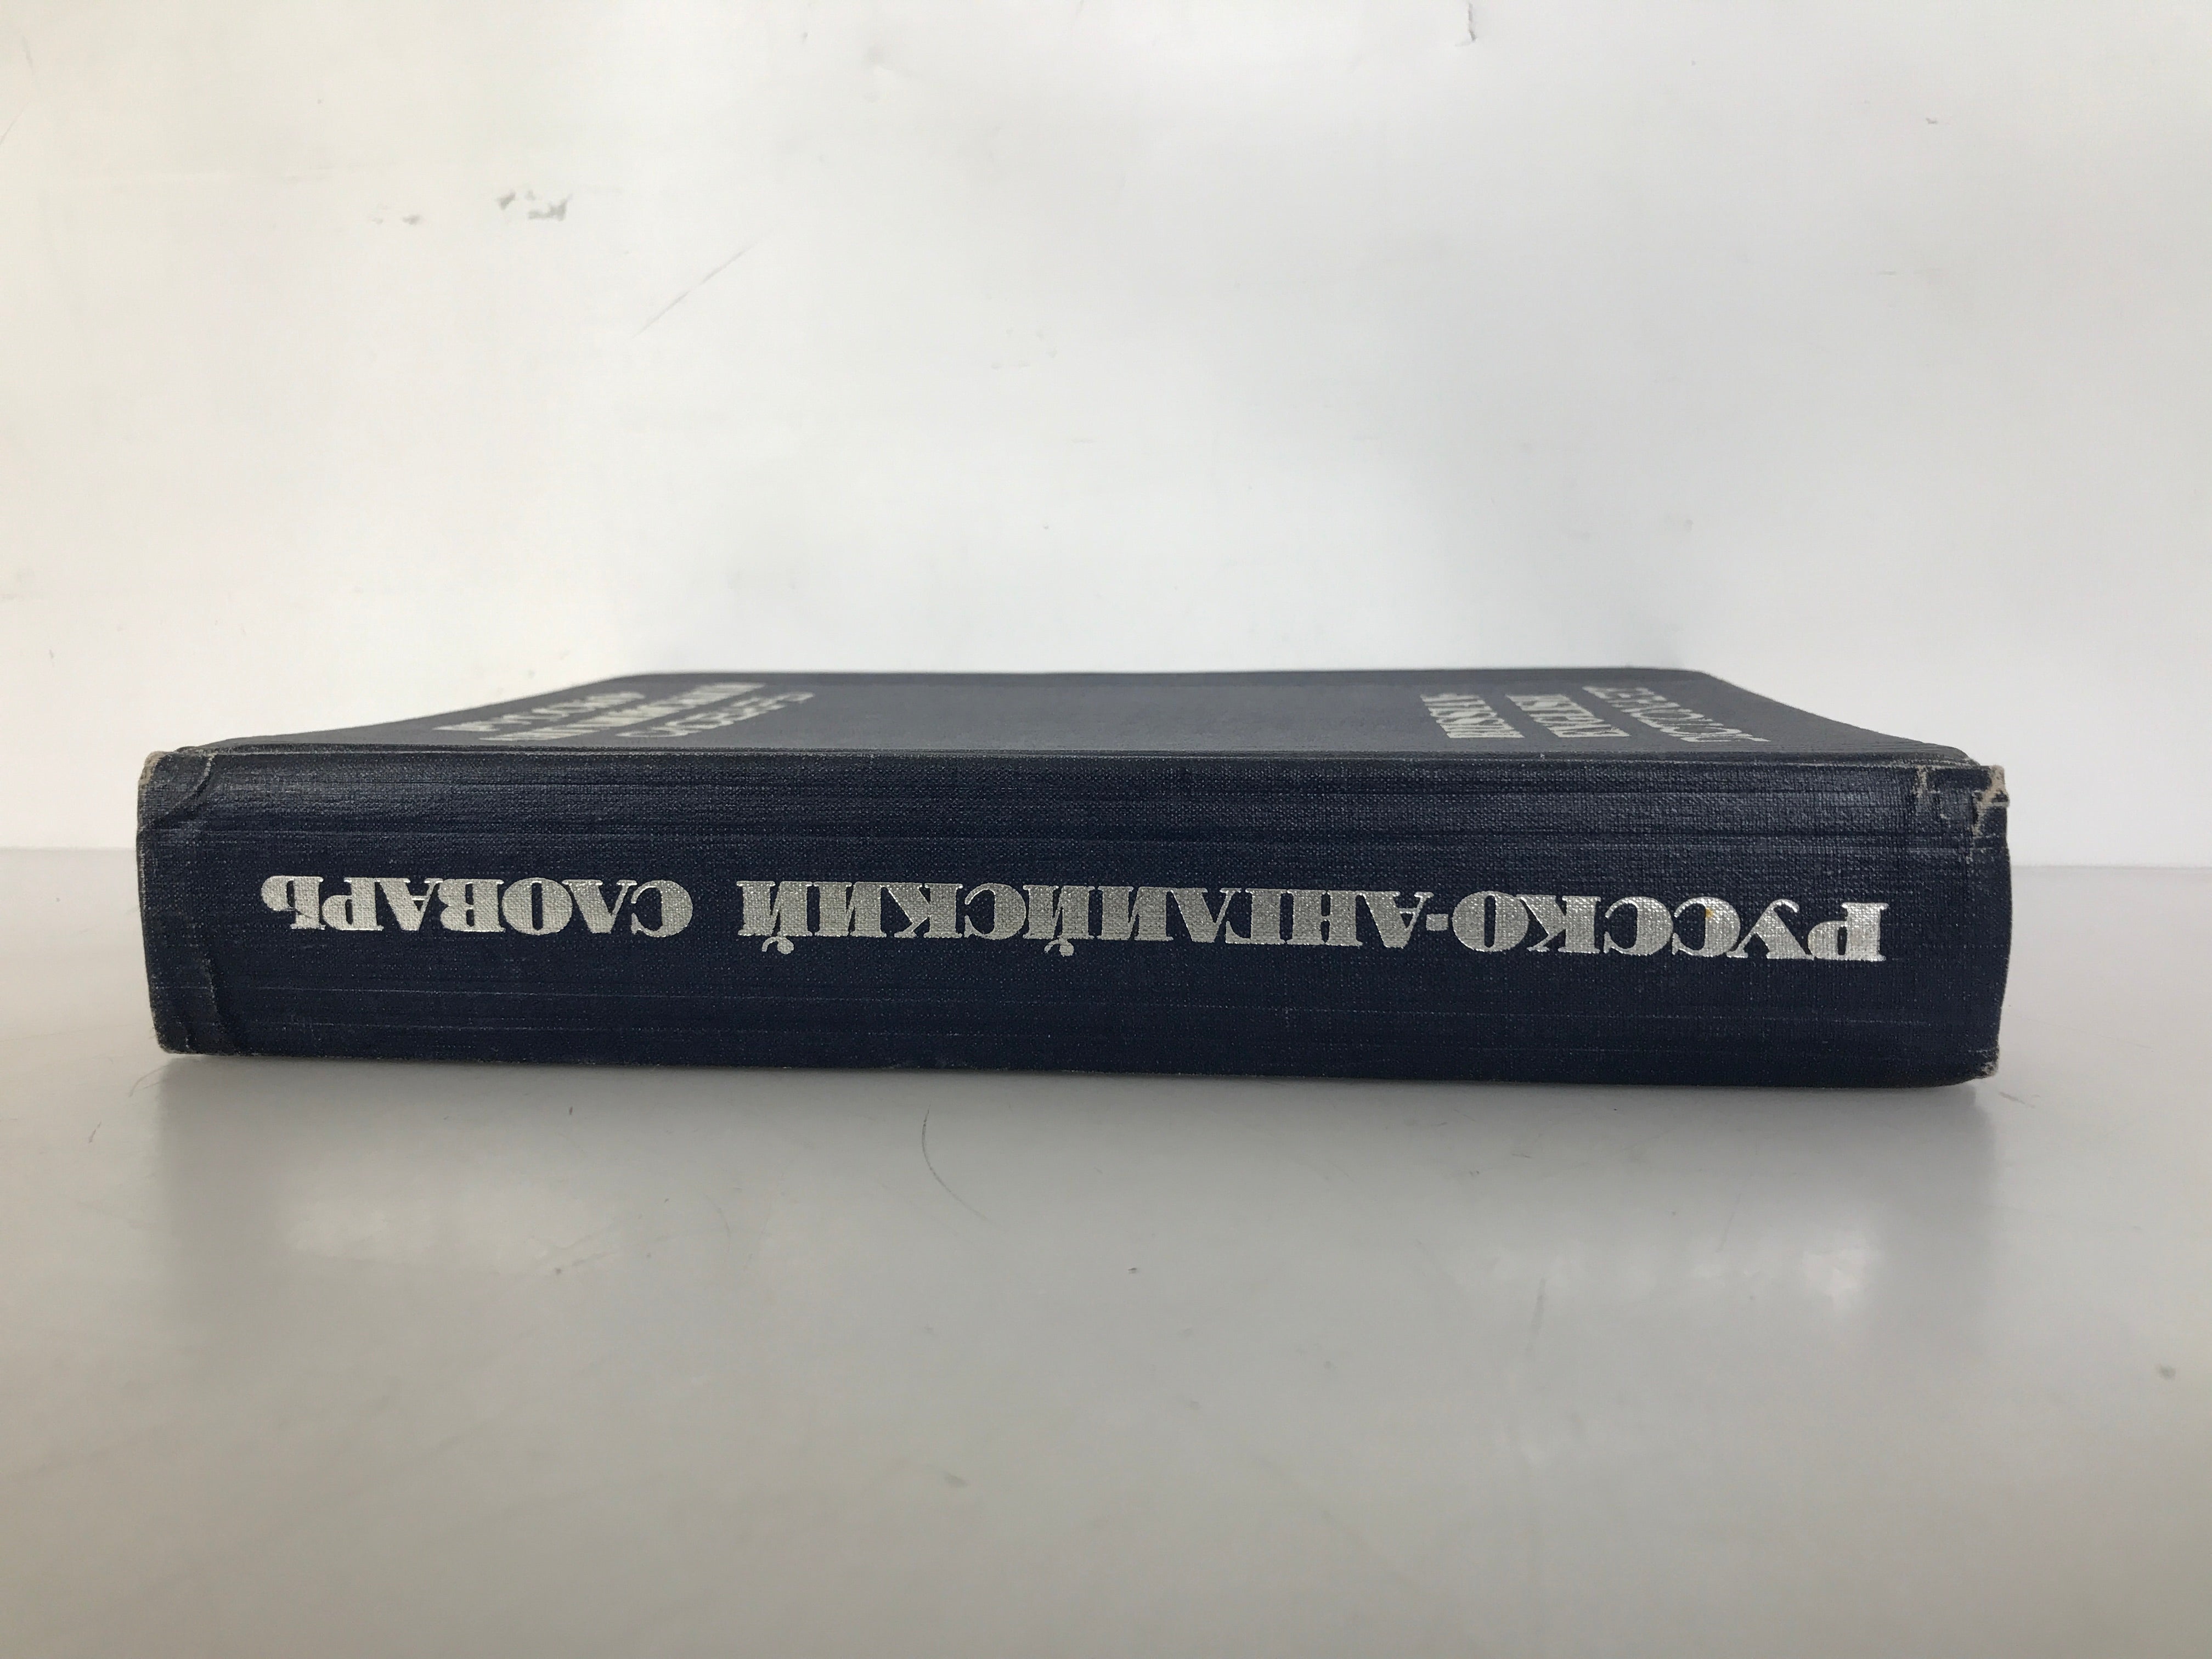 Russian-English Dictionary "Soviet Encyclopedia" Publishing House 1969 HC